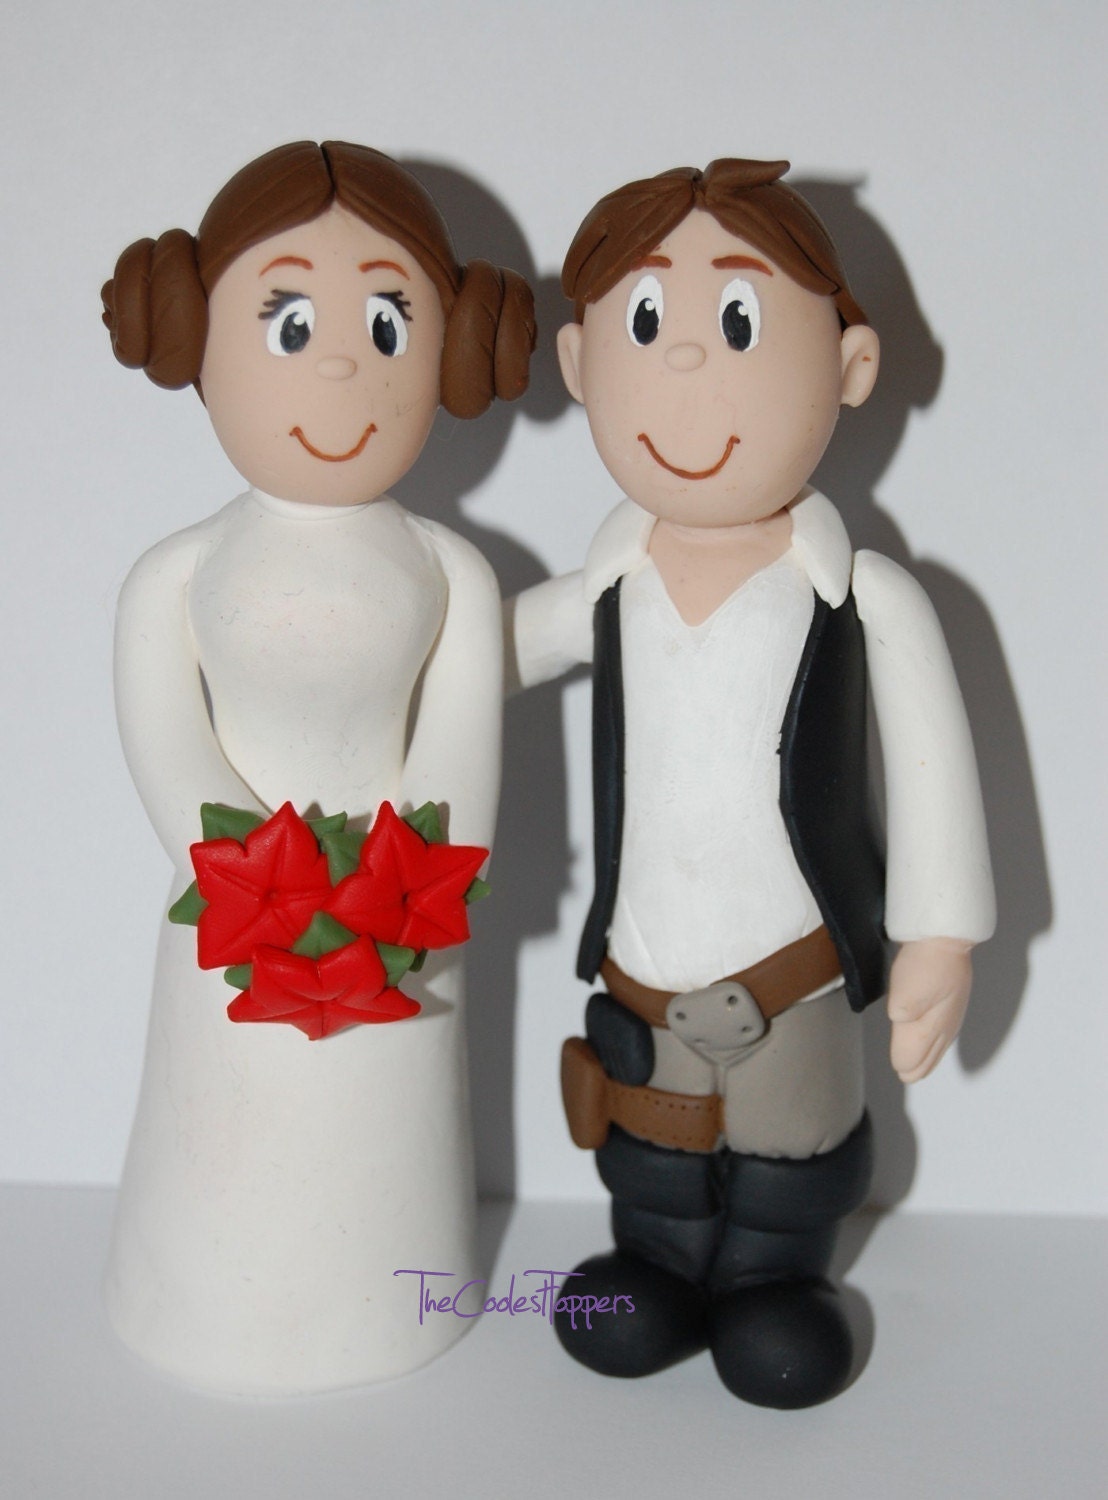 Han and Leia Wedding Cake Topper